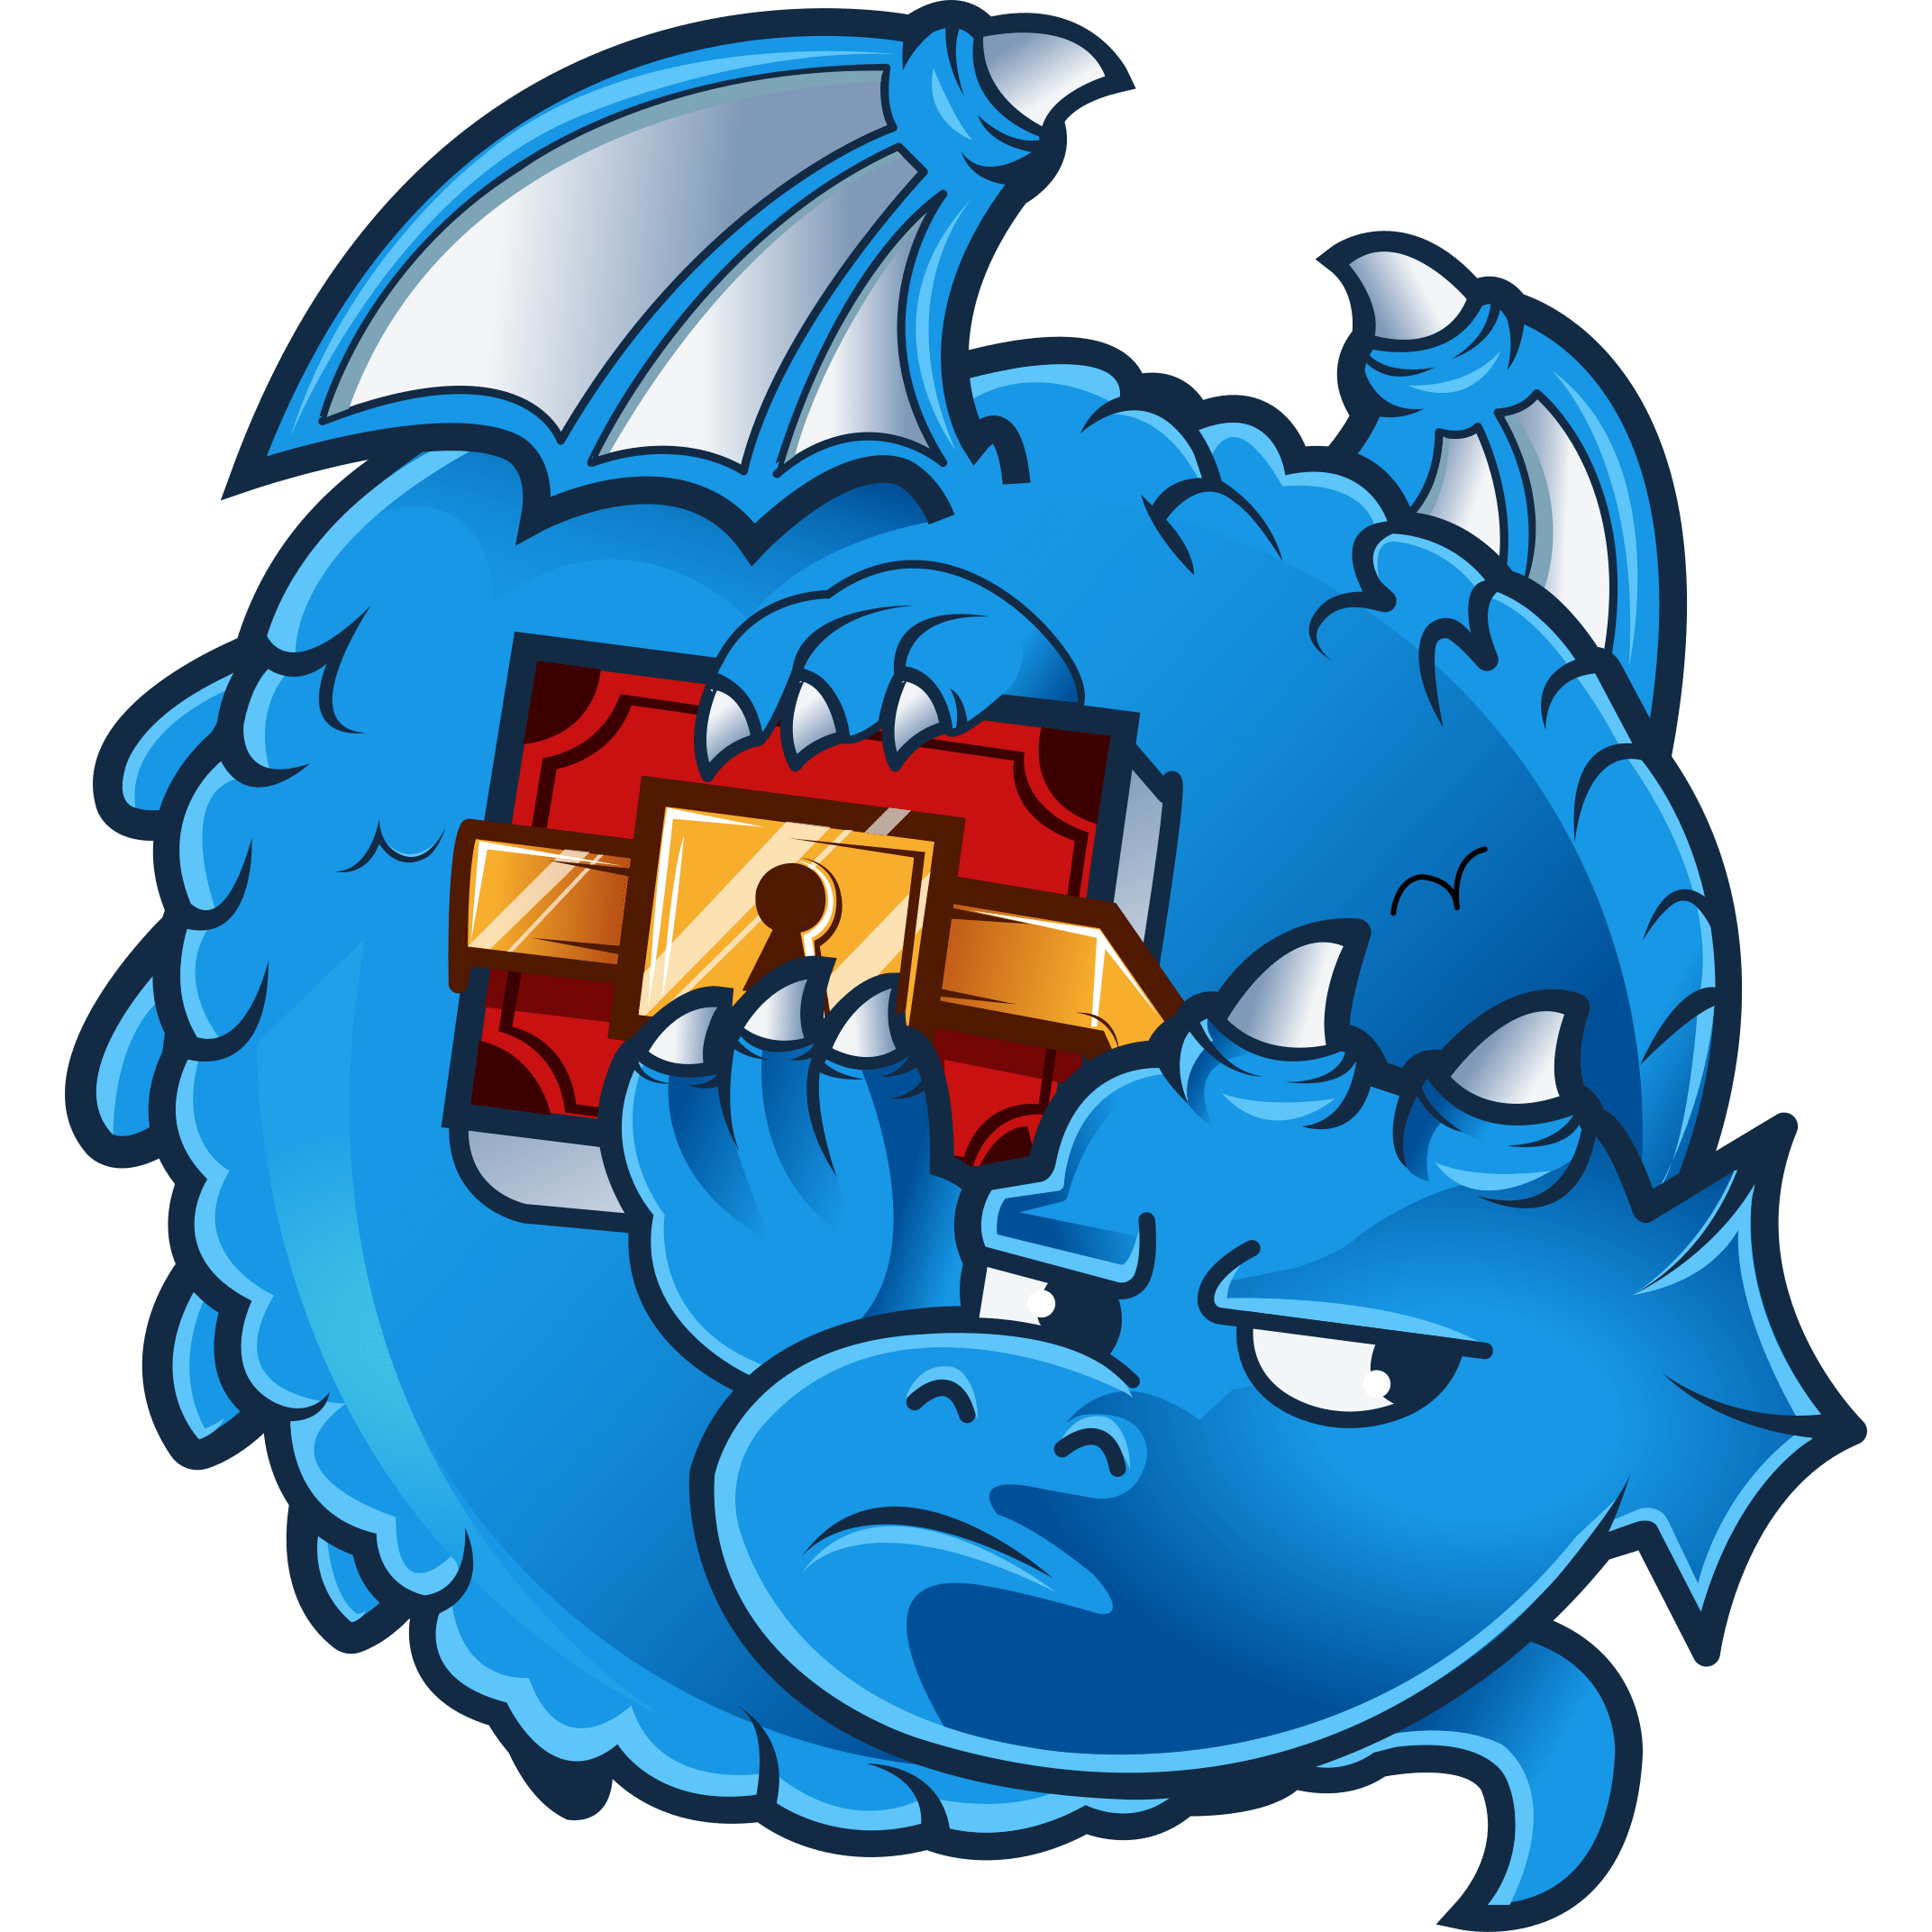 Dragonchain logo in png format